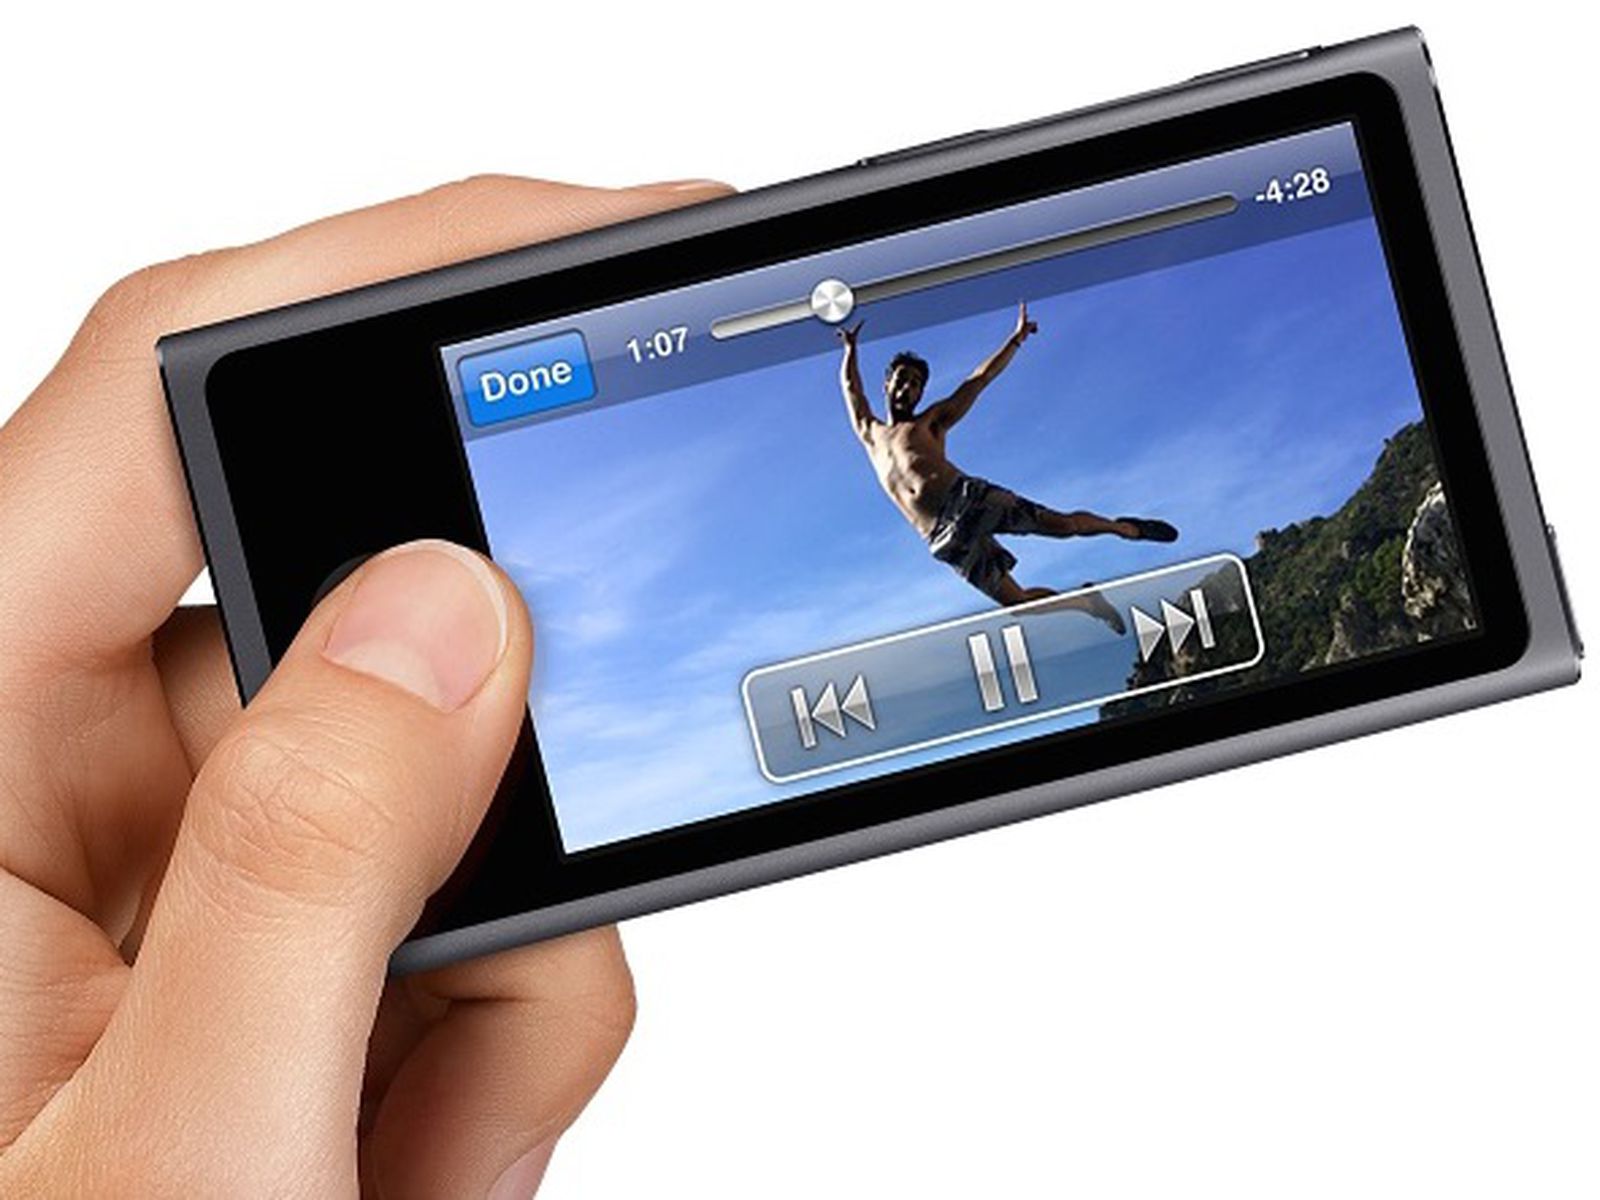 iPod nano: Mid-Range iPod, Now Discontinued